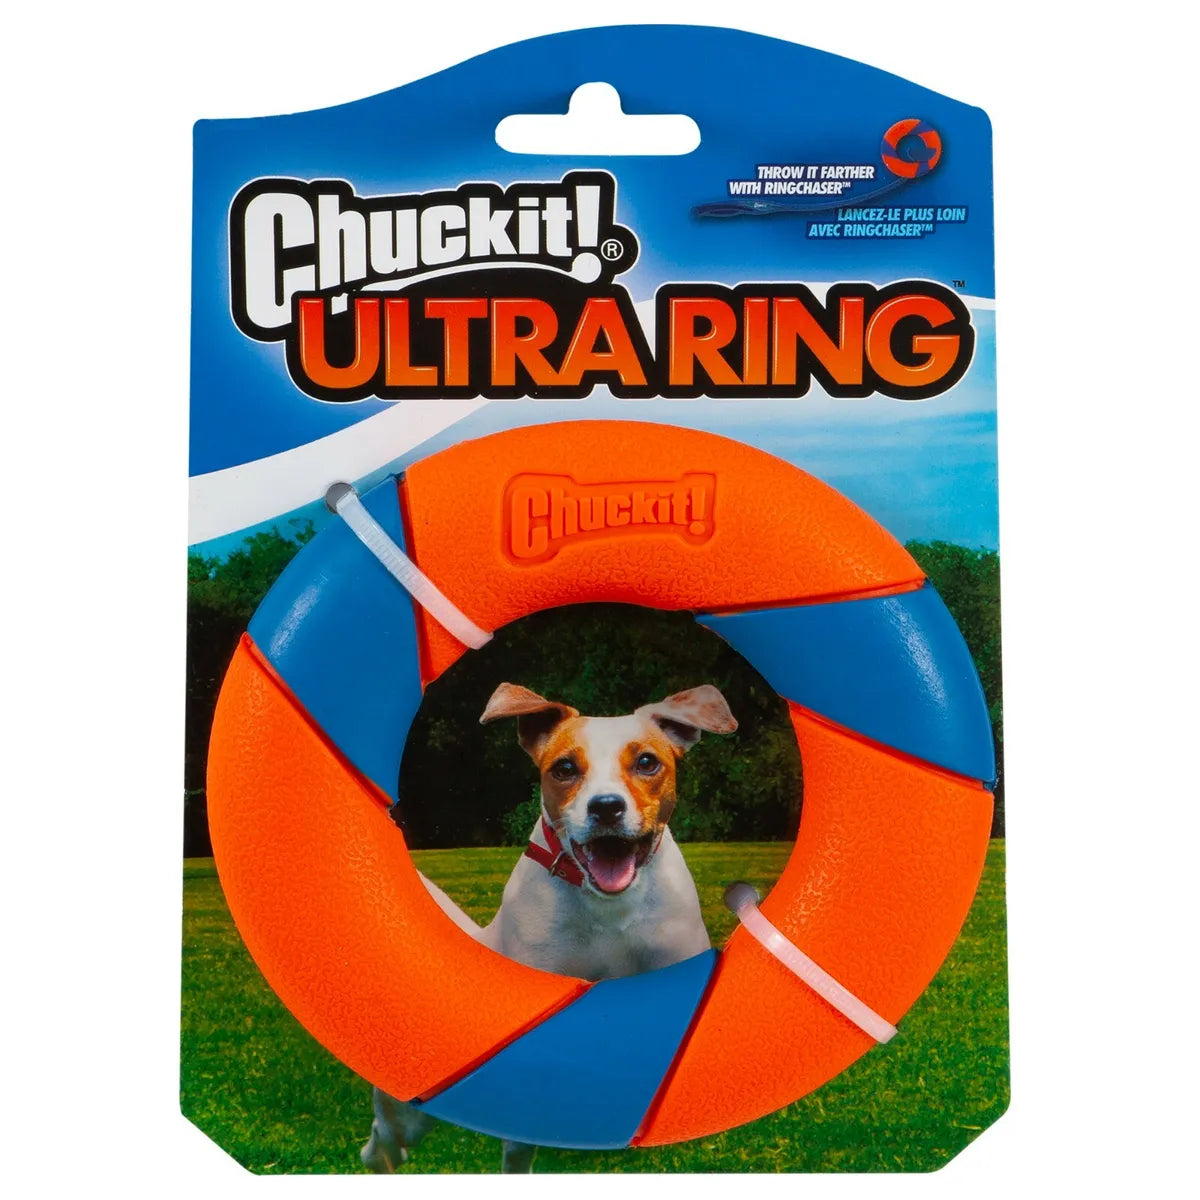 Chuckit!® Ultra Ring Dog Toy